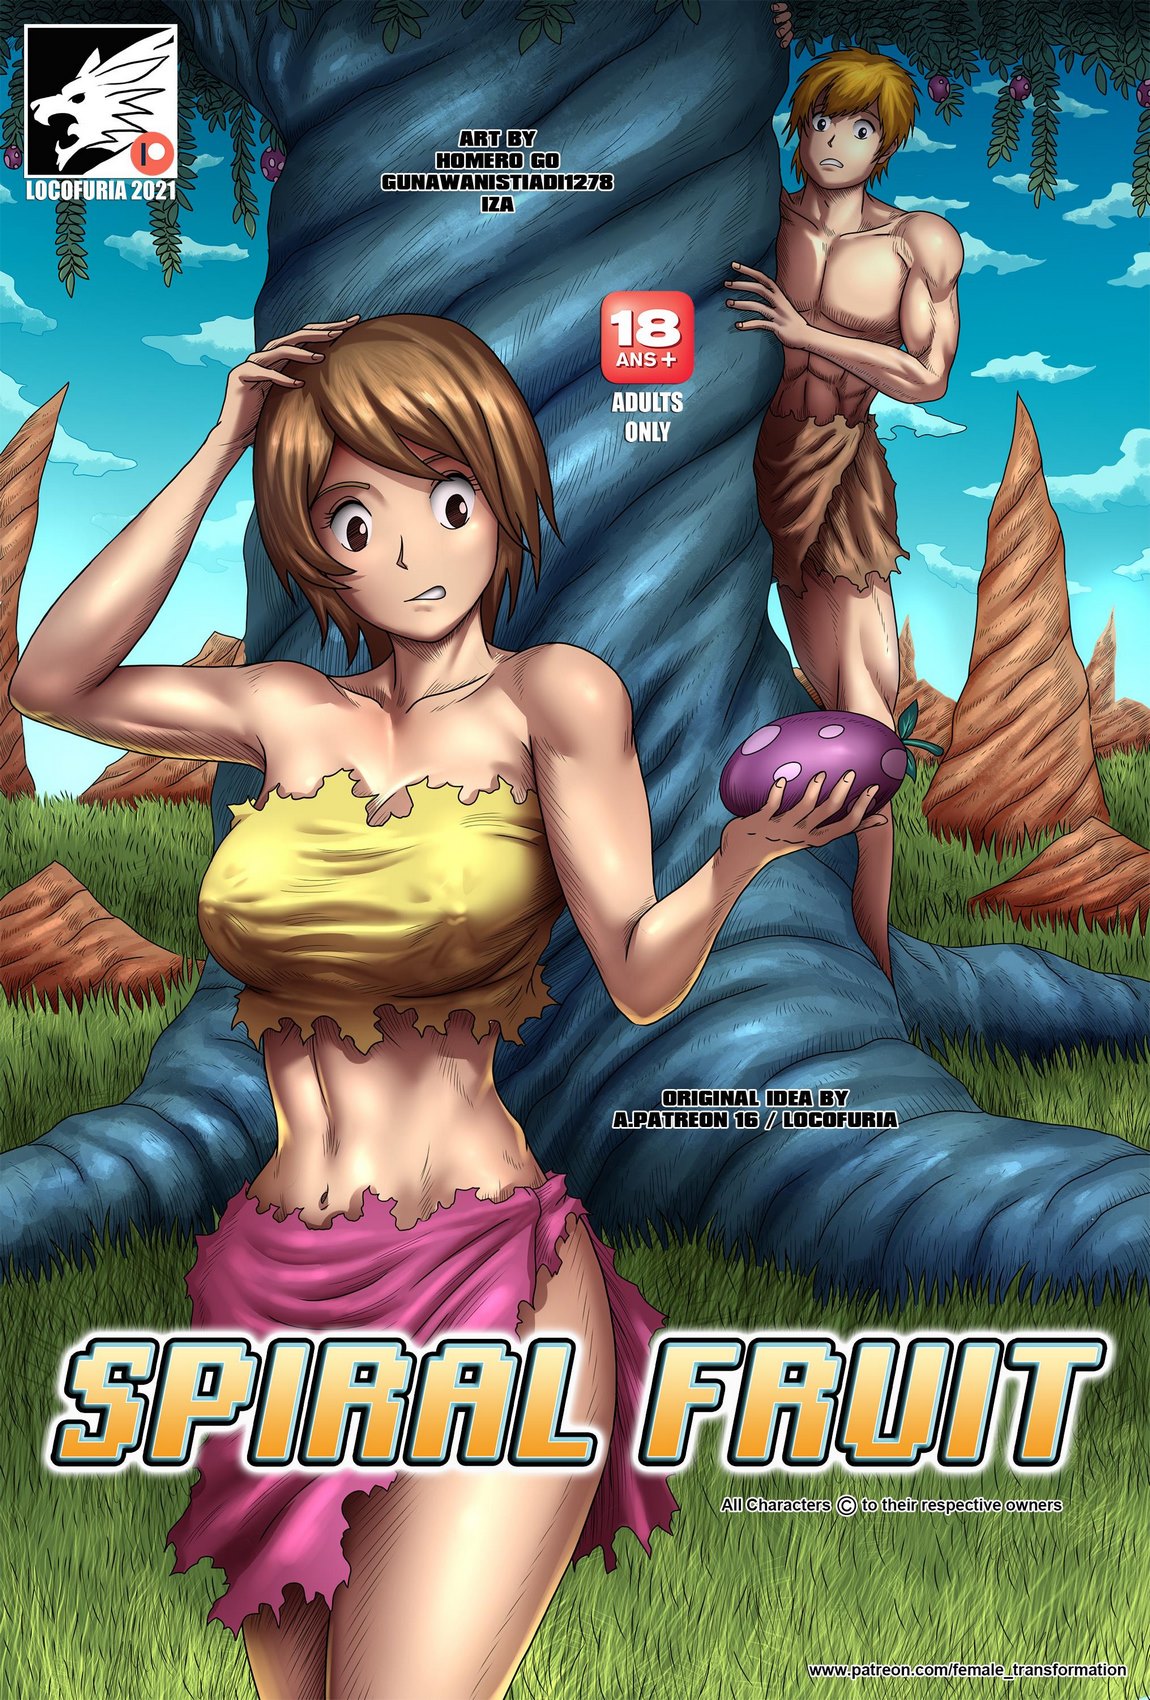 Spiral Porn - Locofuria - Spiral Fruit â€¢ Free Porn Comics